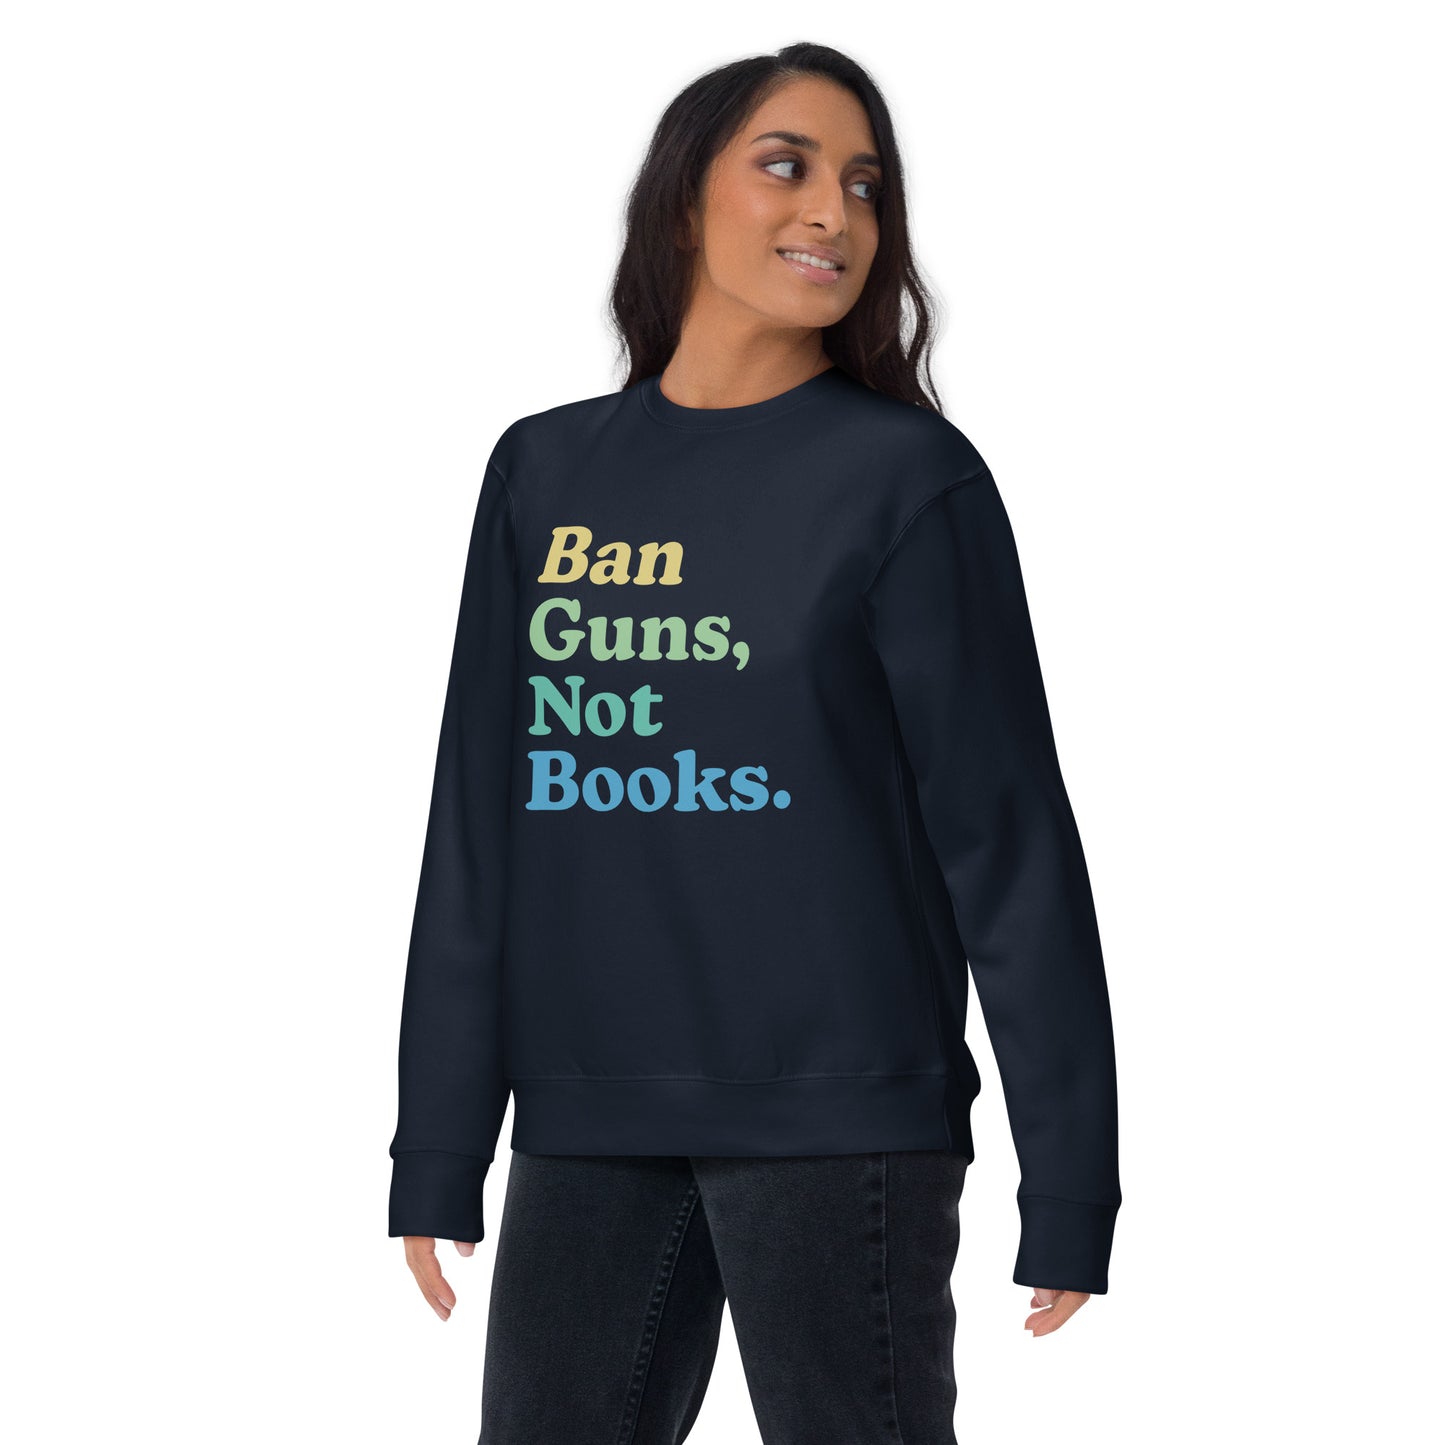 Ban Guns Not Books - Sweatshirt